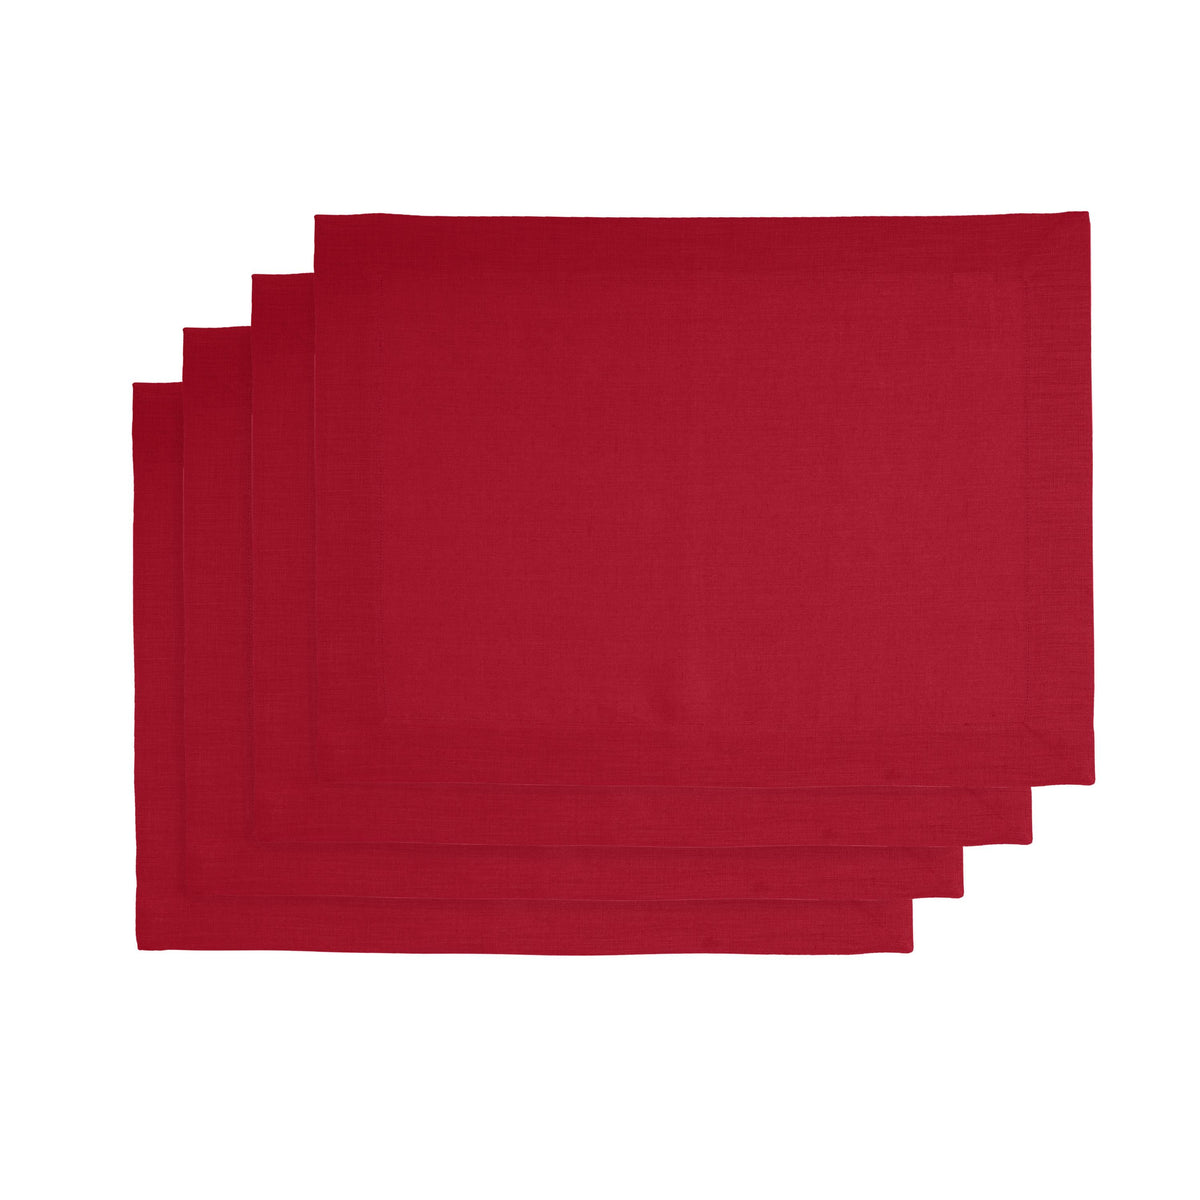 Light Red Linen Placemats 14 x 19 Inch Set of 4 - Hemmed